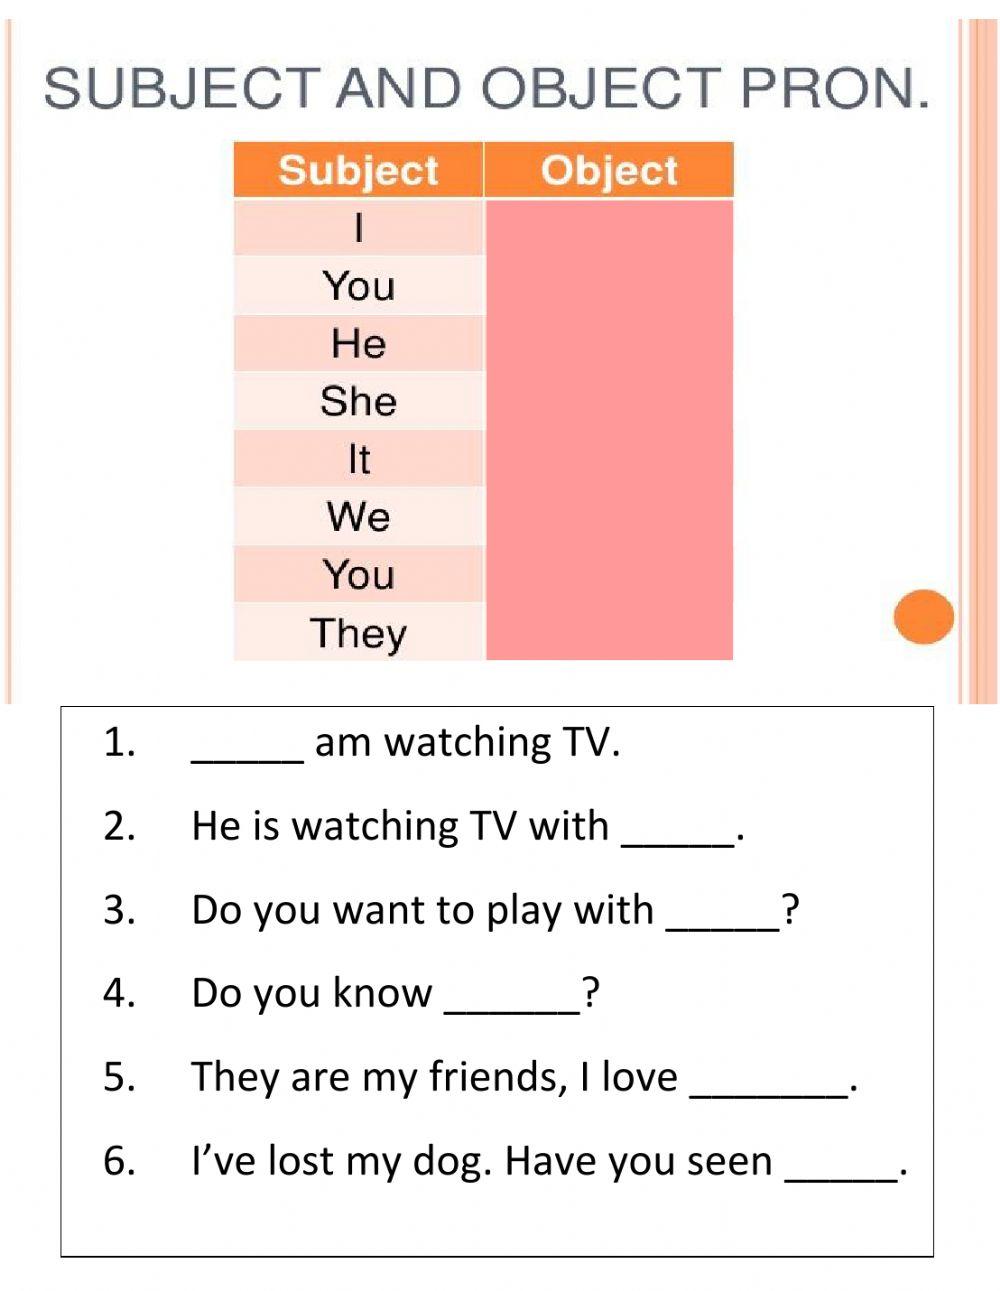 Pronouns as subject-object